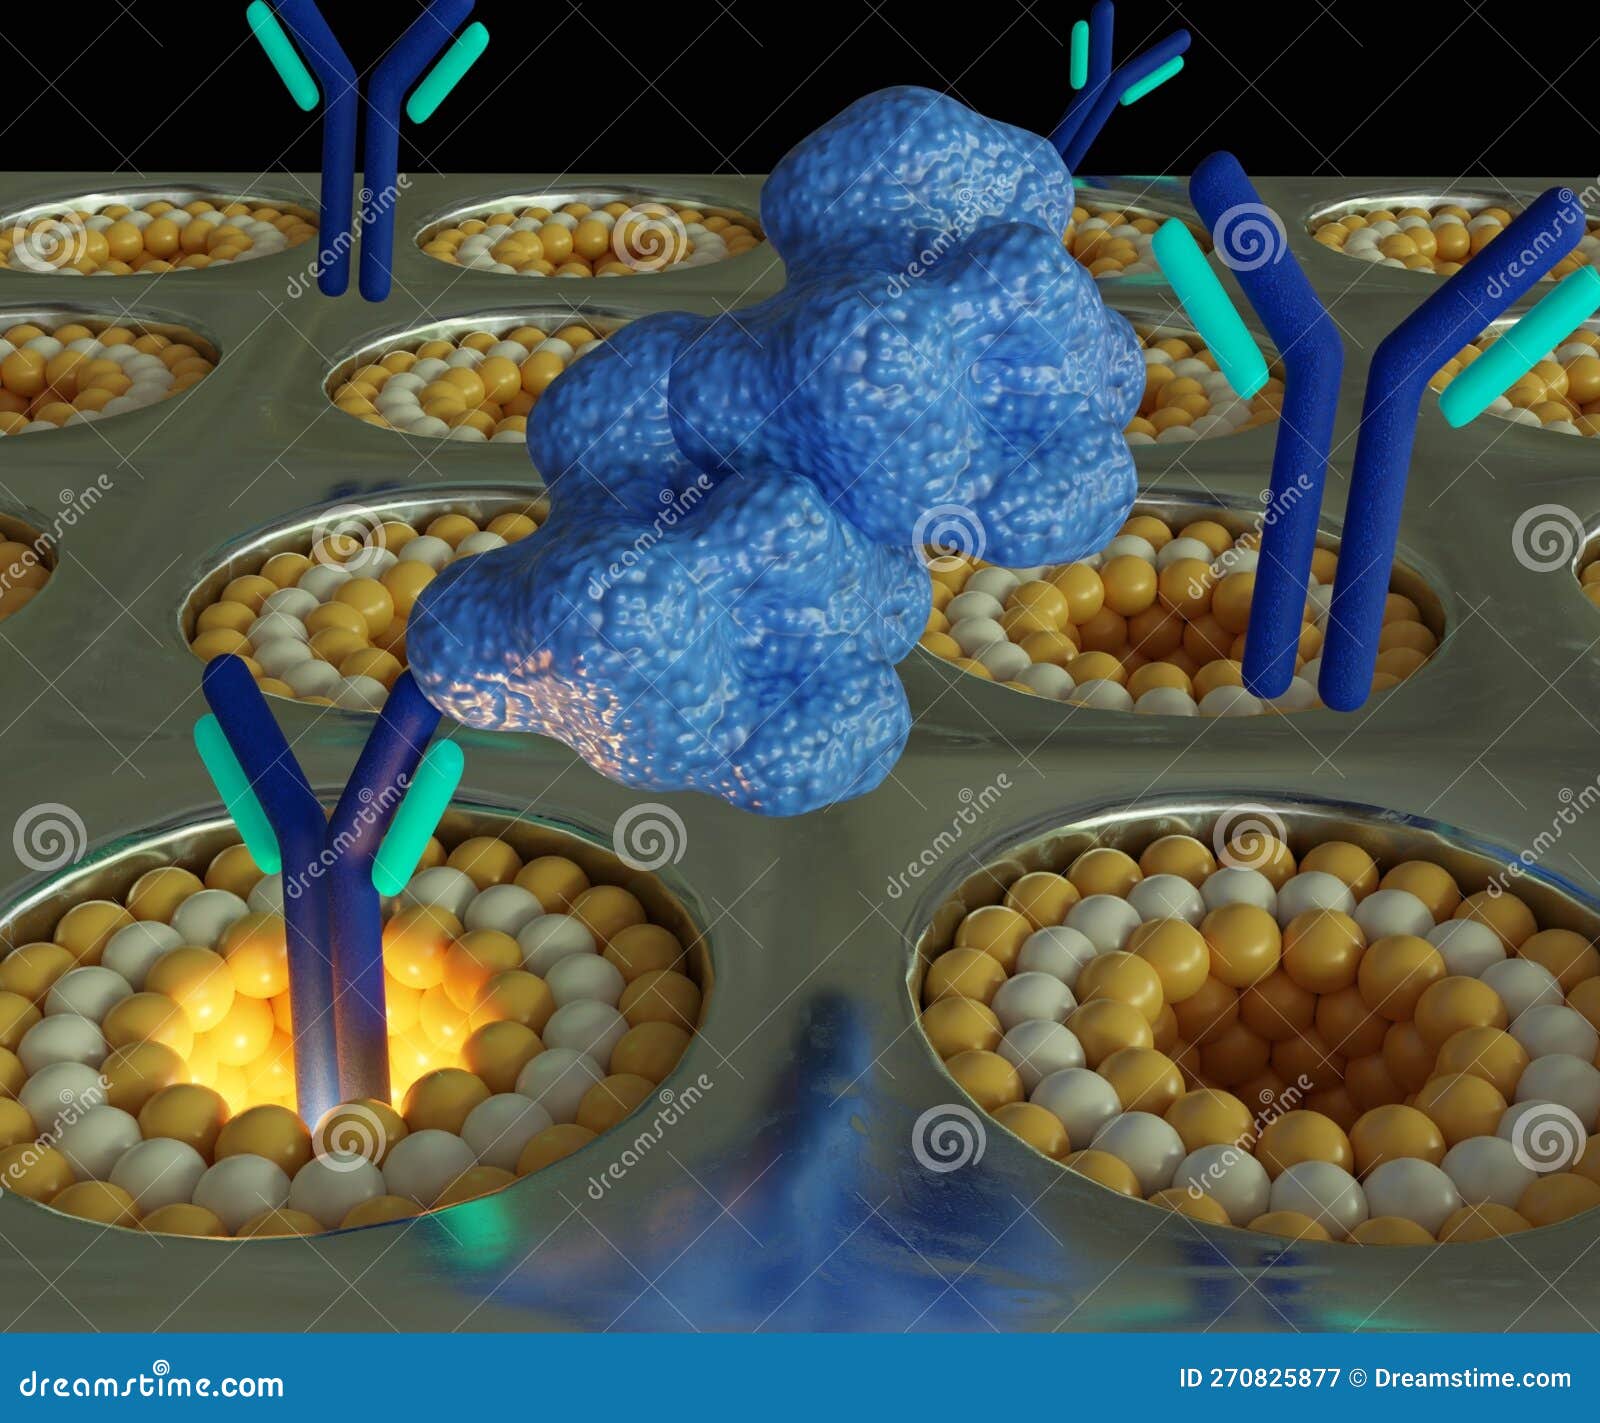 proteins as analytes conjugate on antibody molecule or receptor flow through metal film nanoholes of opto-fluidic